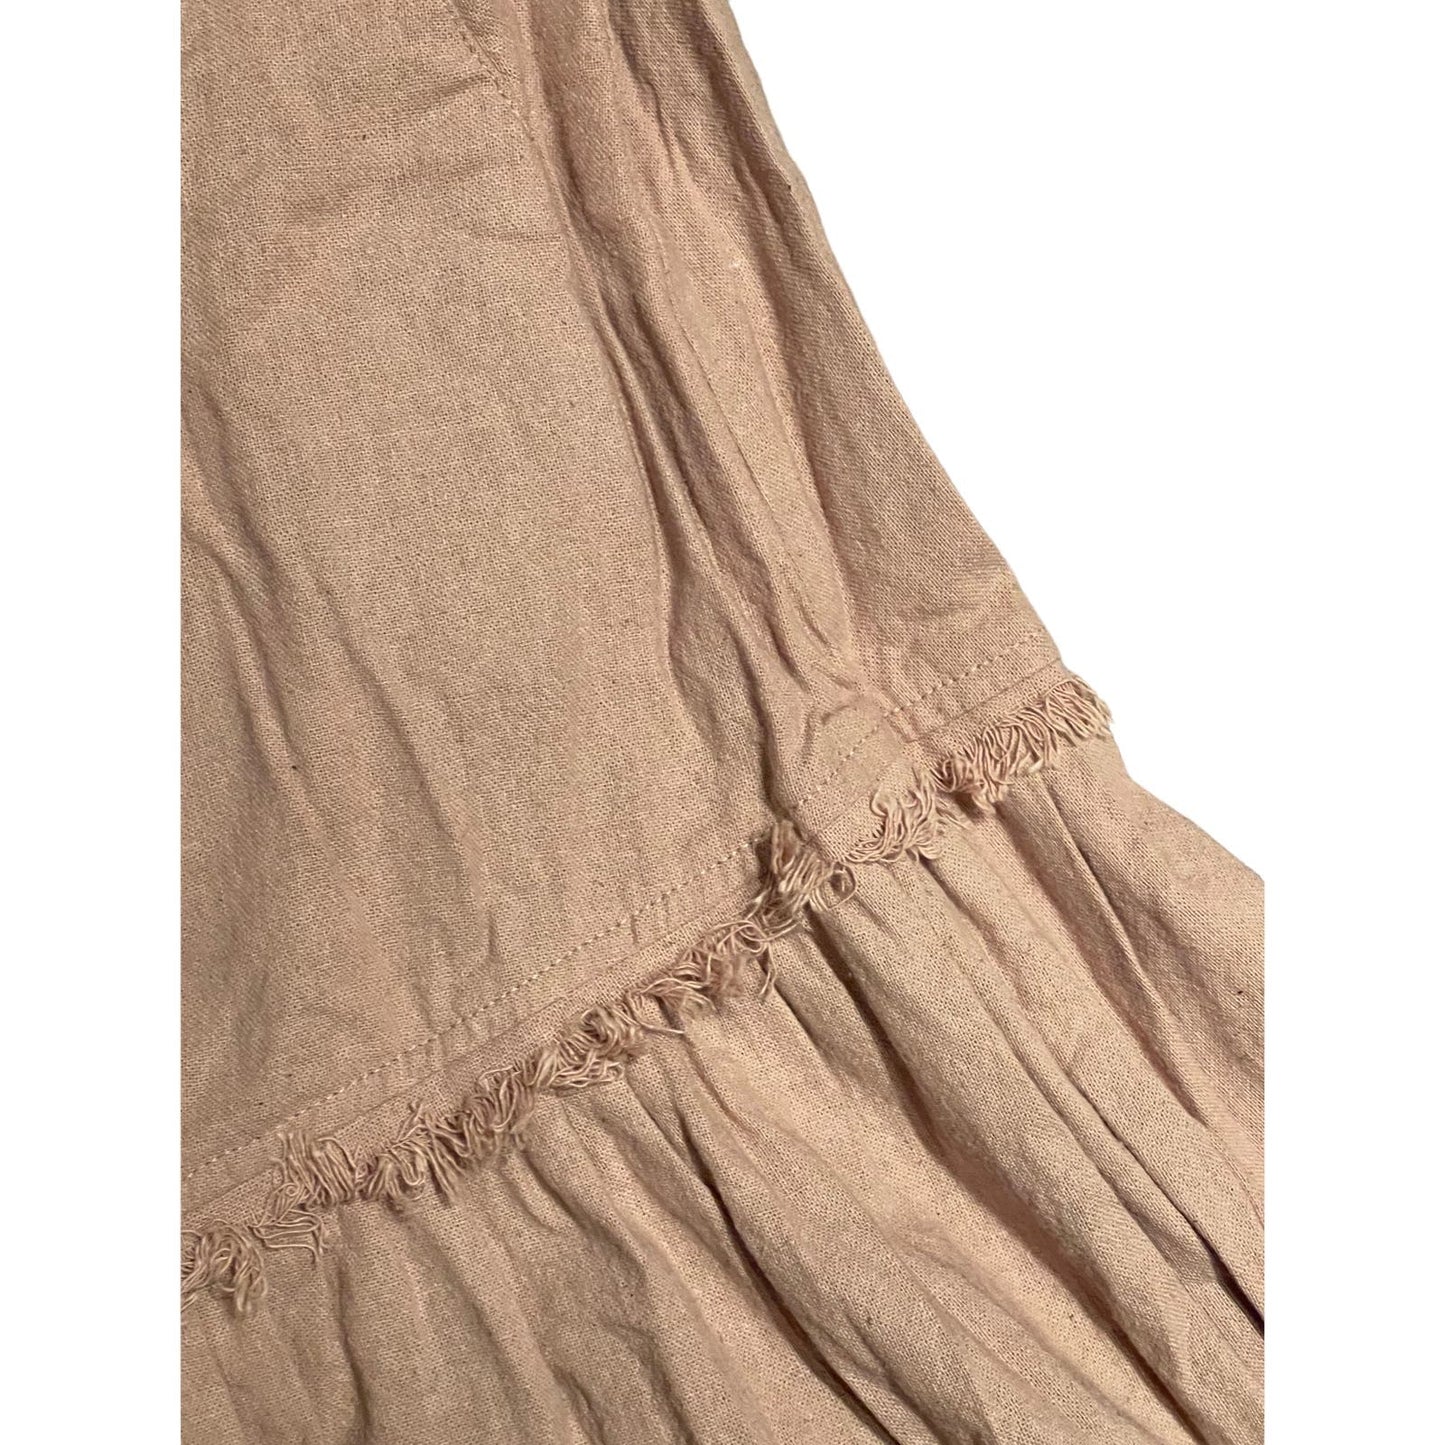 NWT Women's Size Small AYA Sacred Wear Taupe Skirt Long Boho